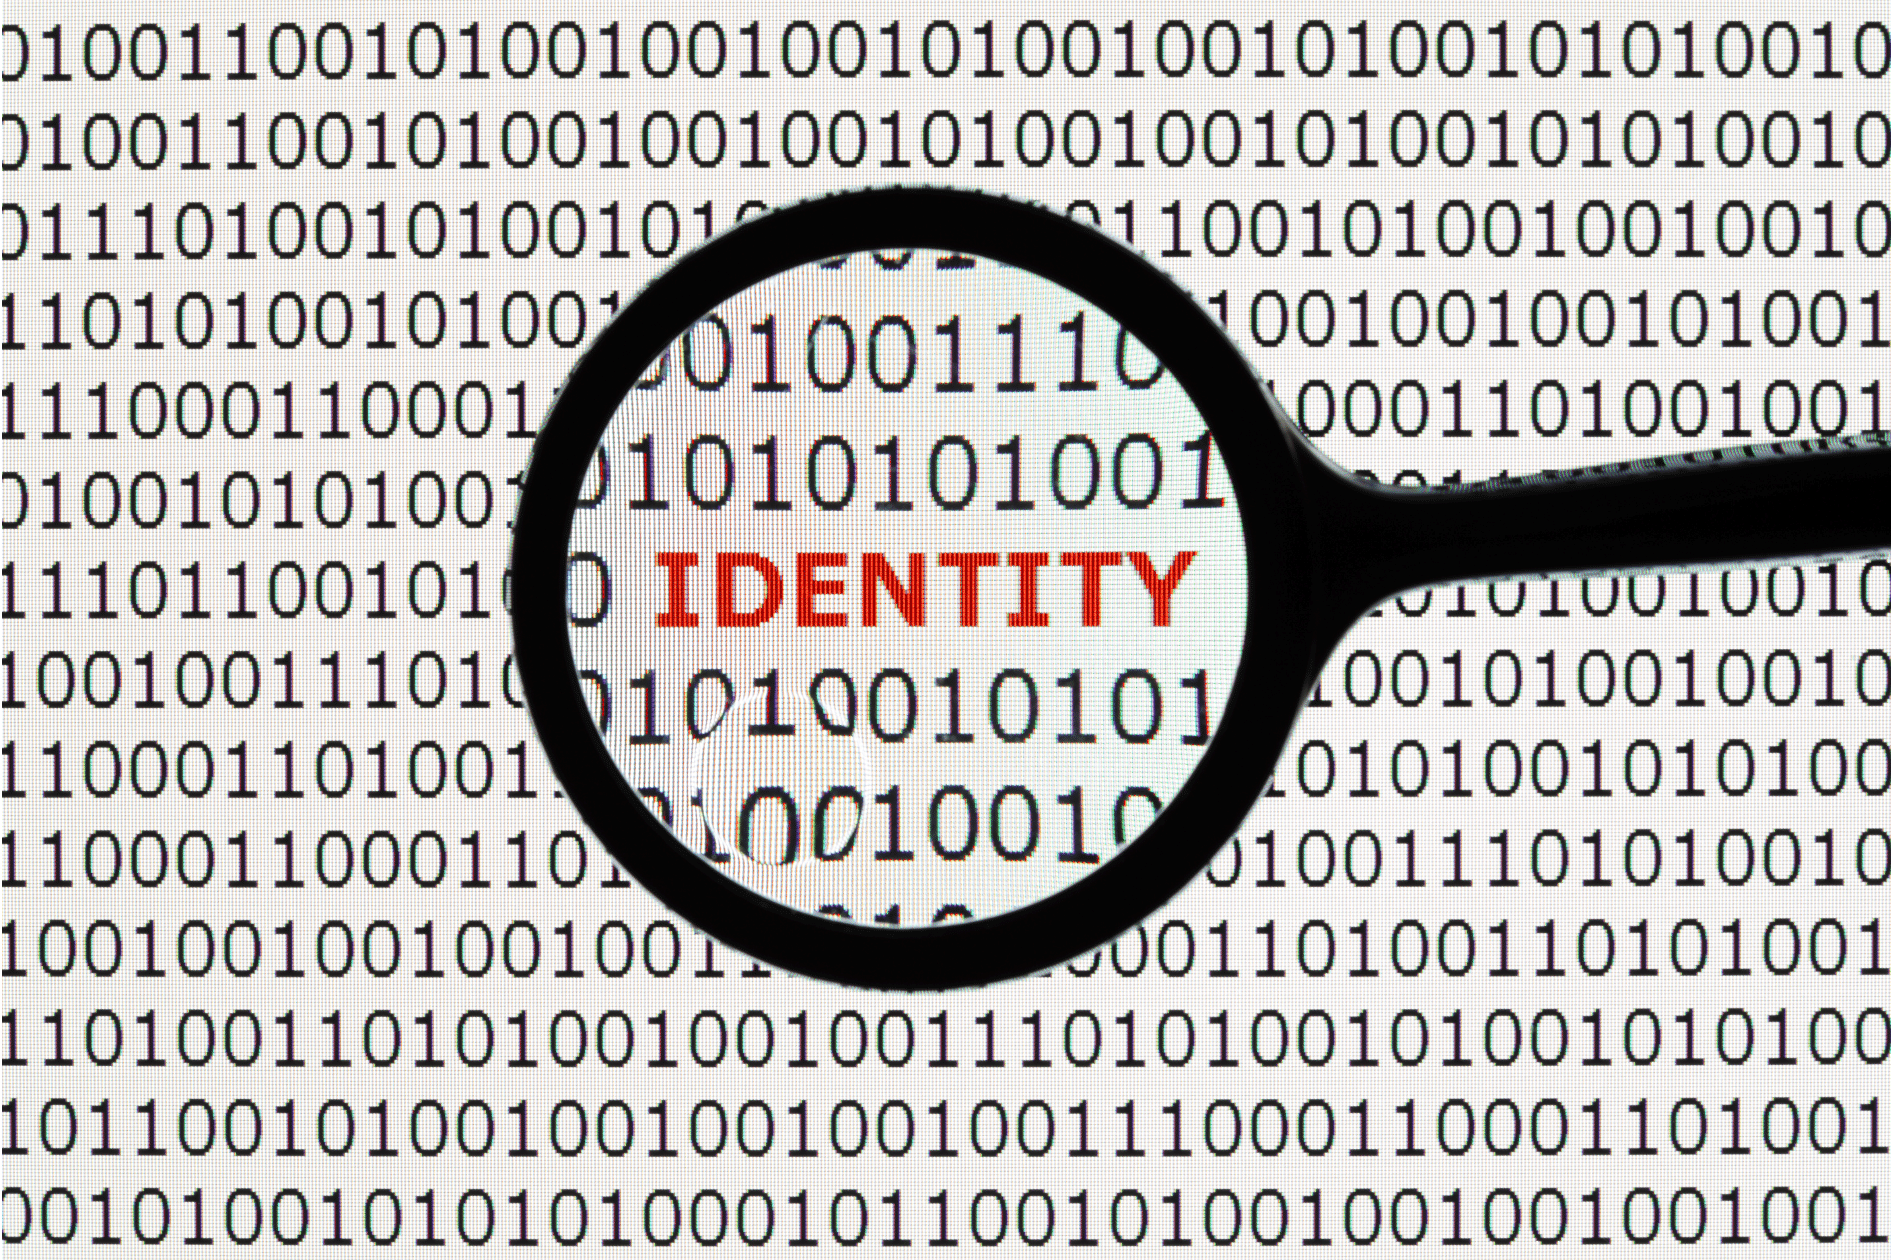 Identity theft prevention